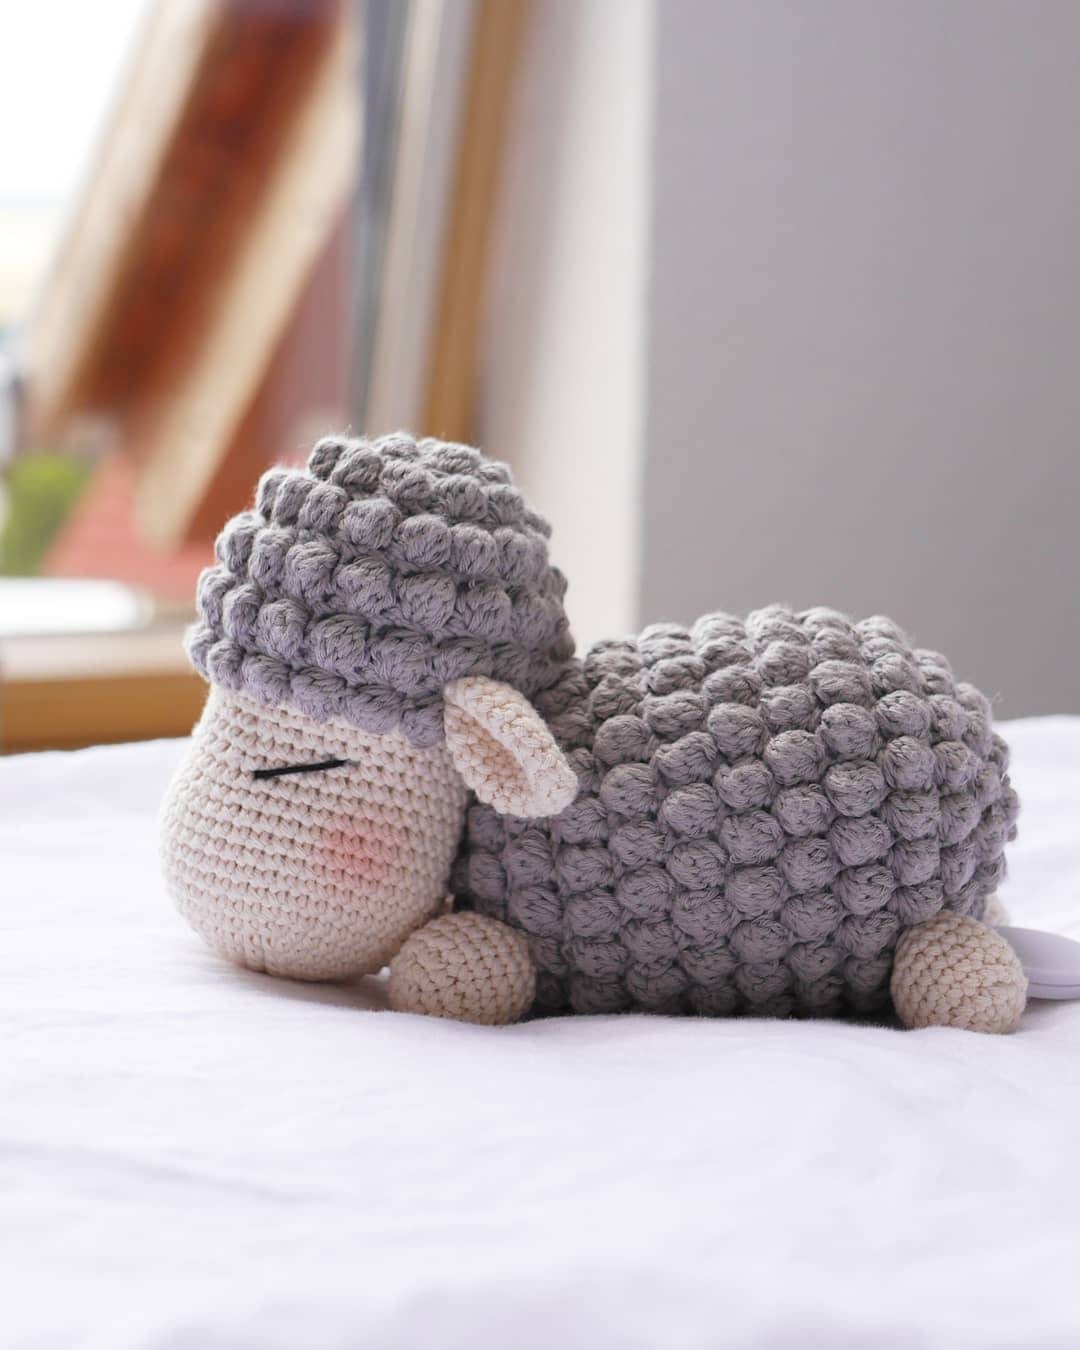 Learn to Crochet - Jan. 5, 12, 19 - Lambspun